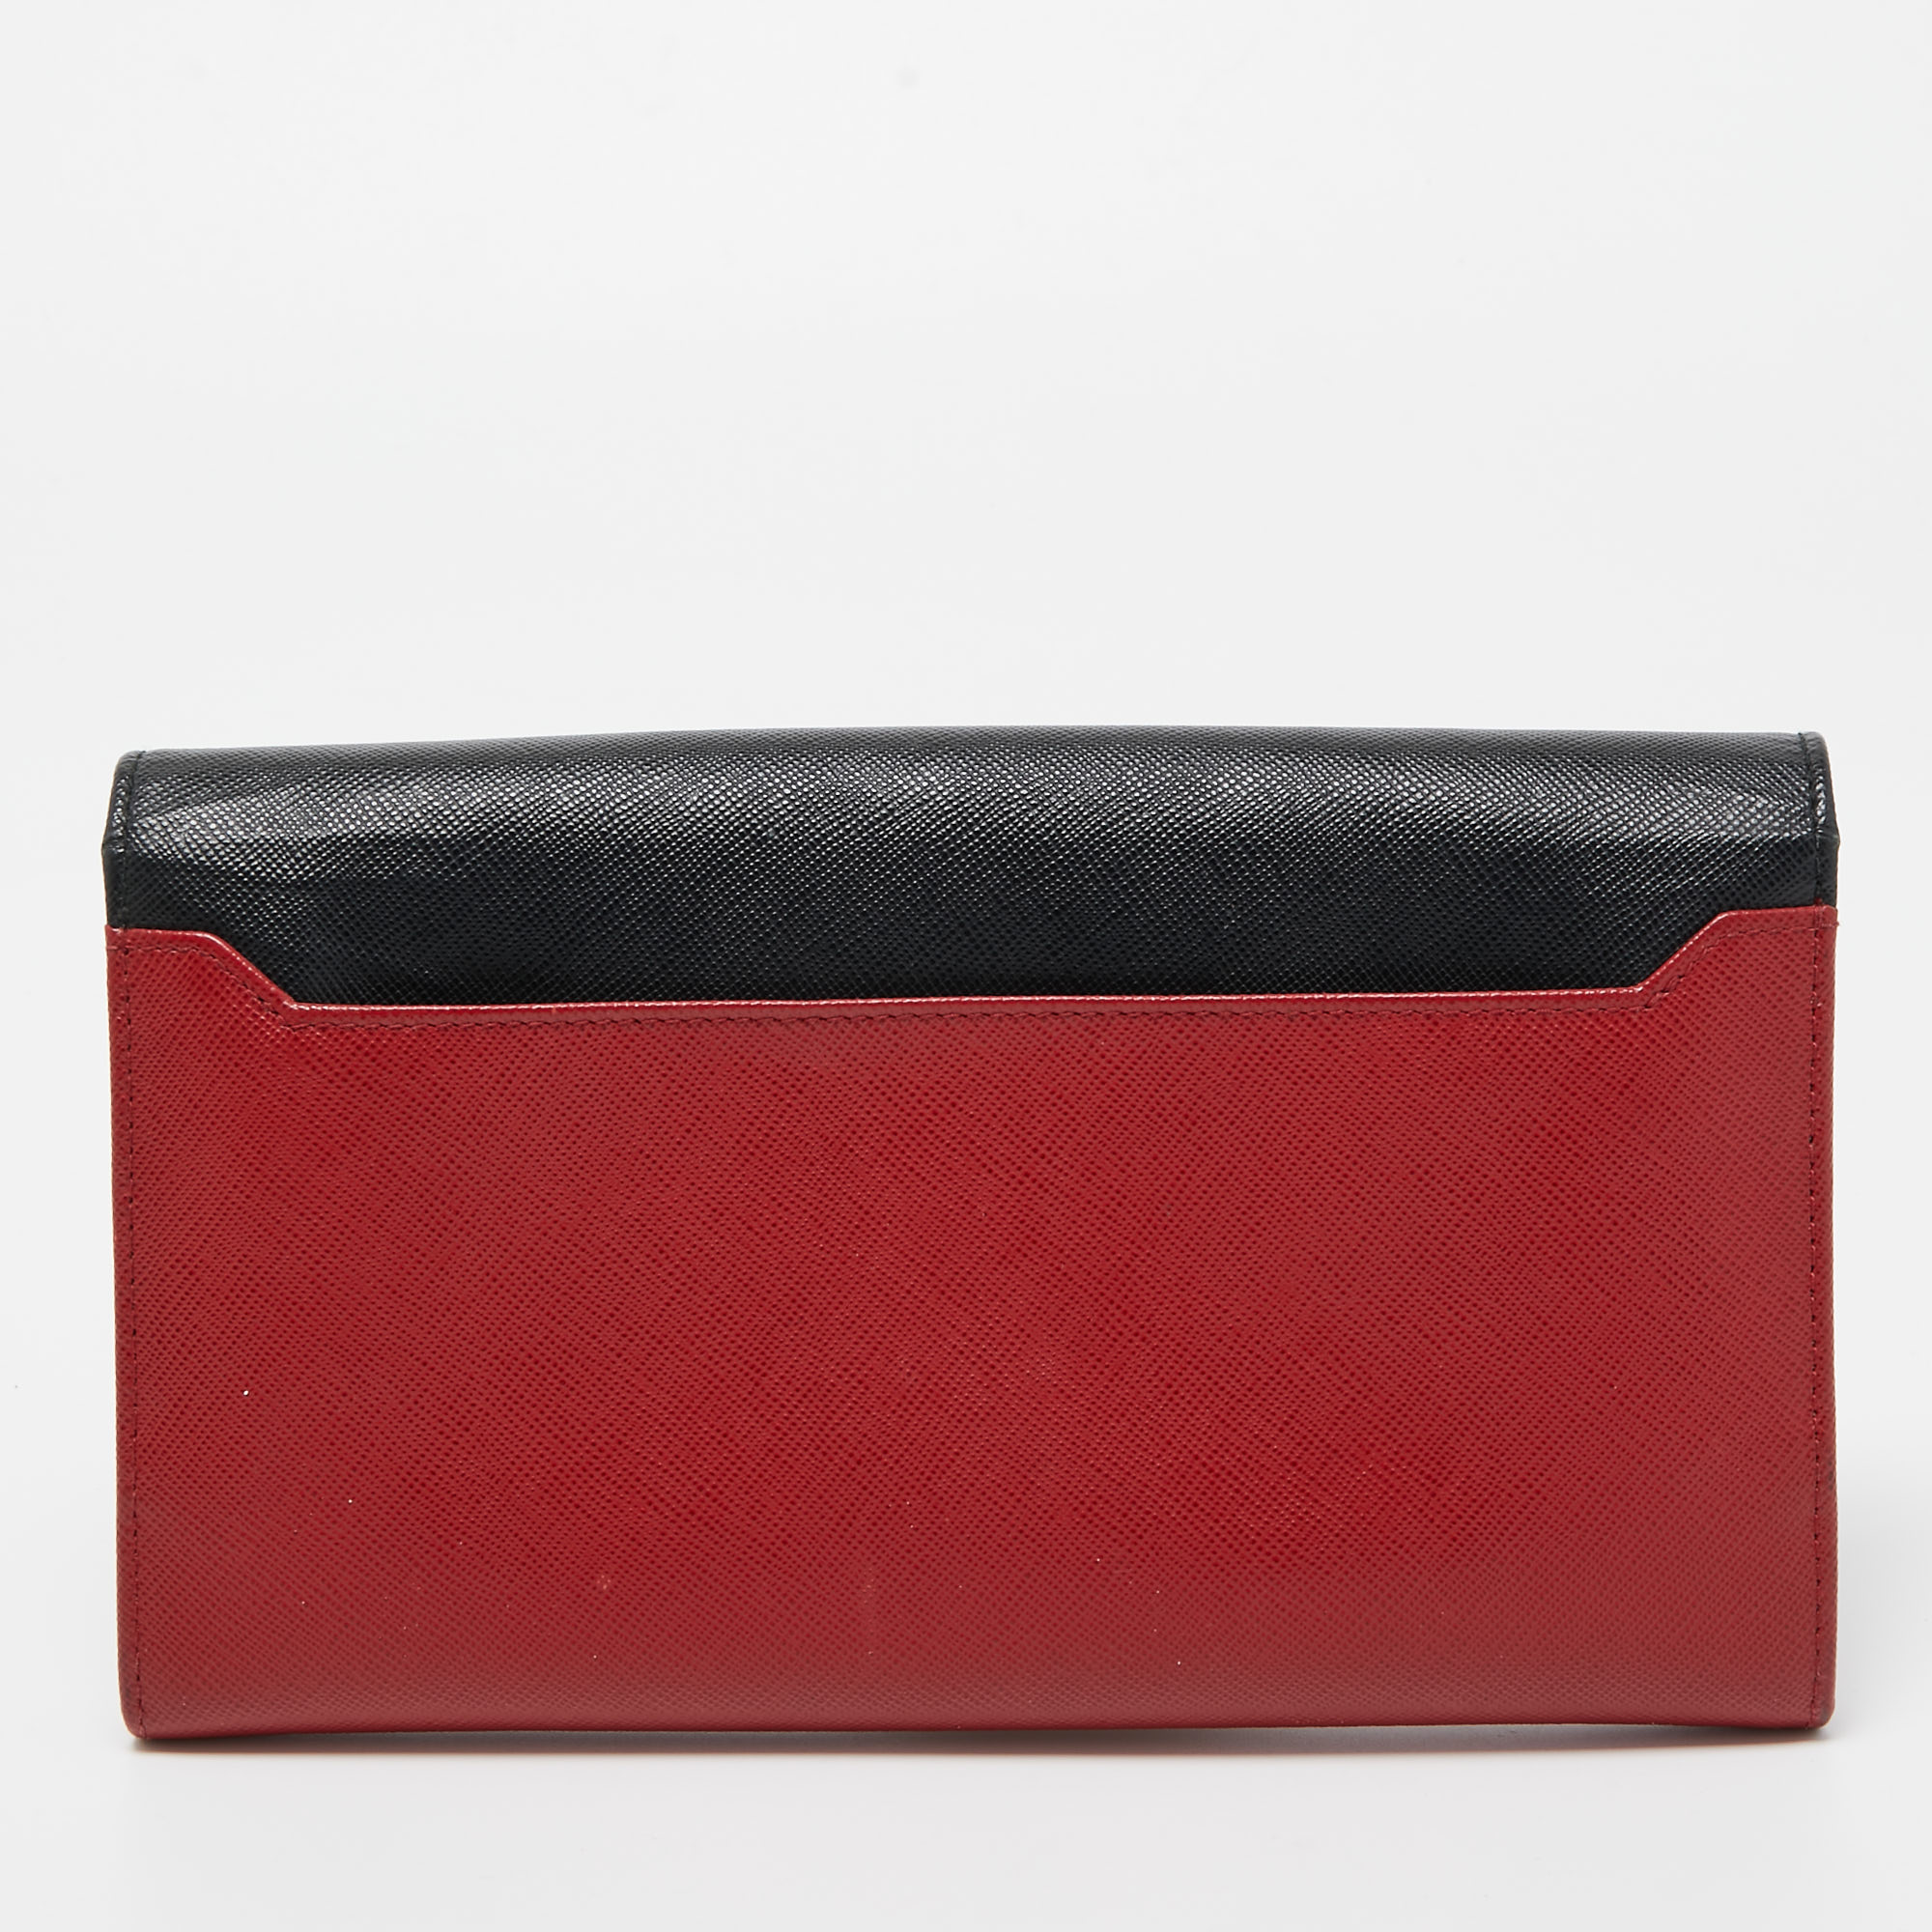 Prada Black/Red Saffiano Leather Turn Lock Wallet